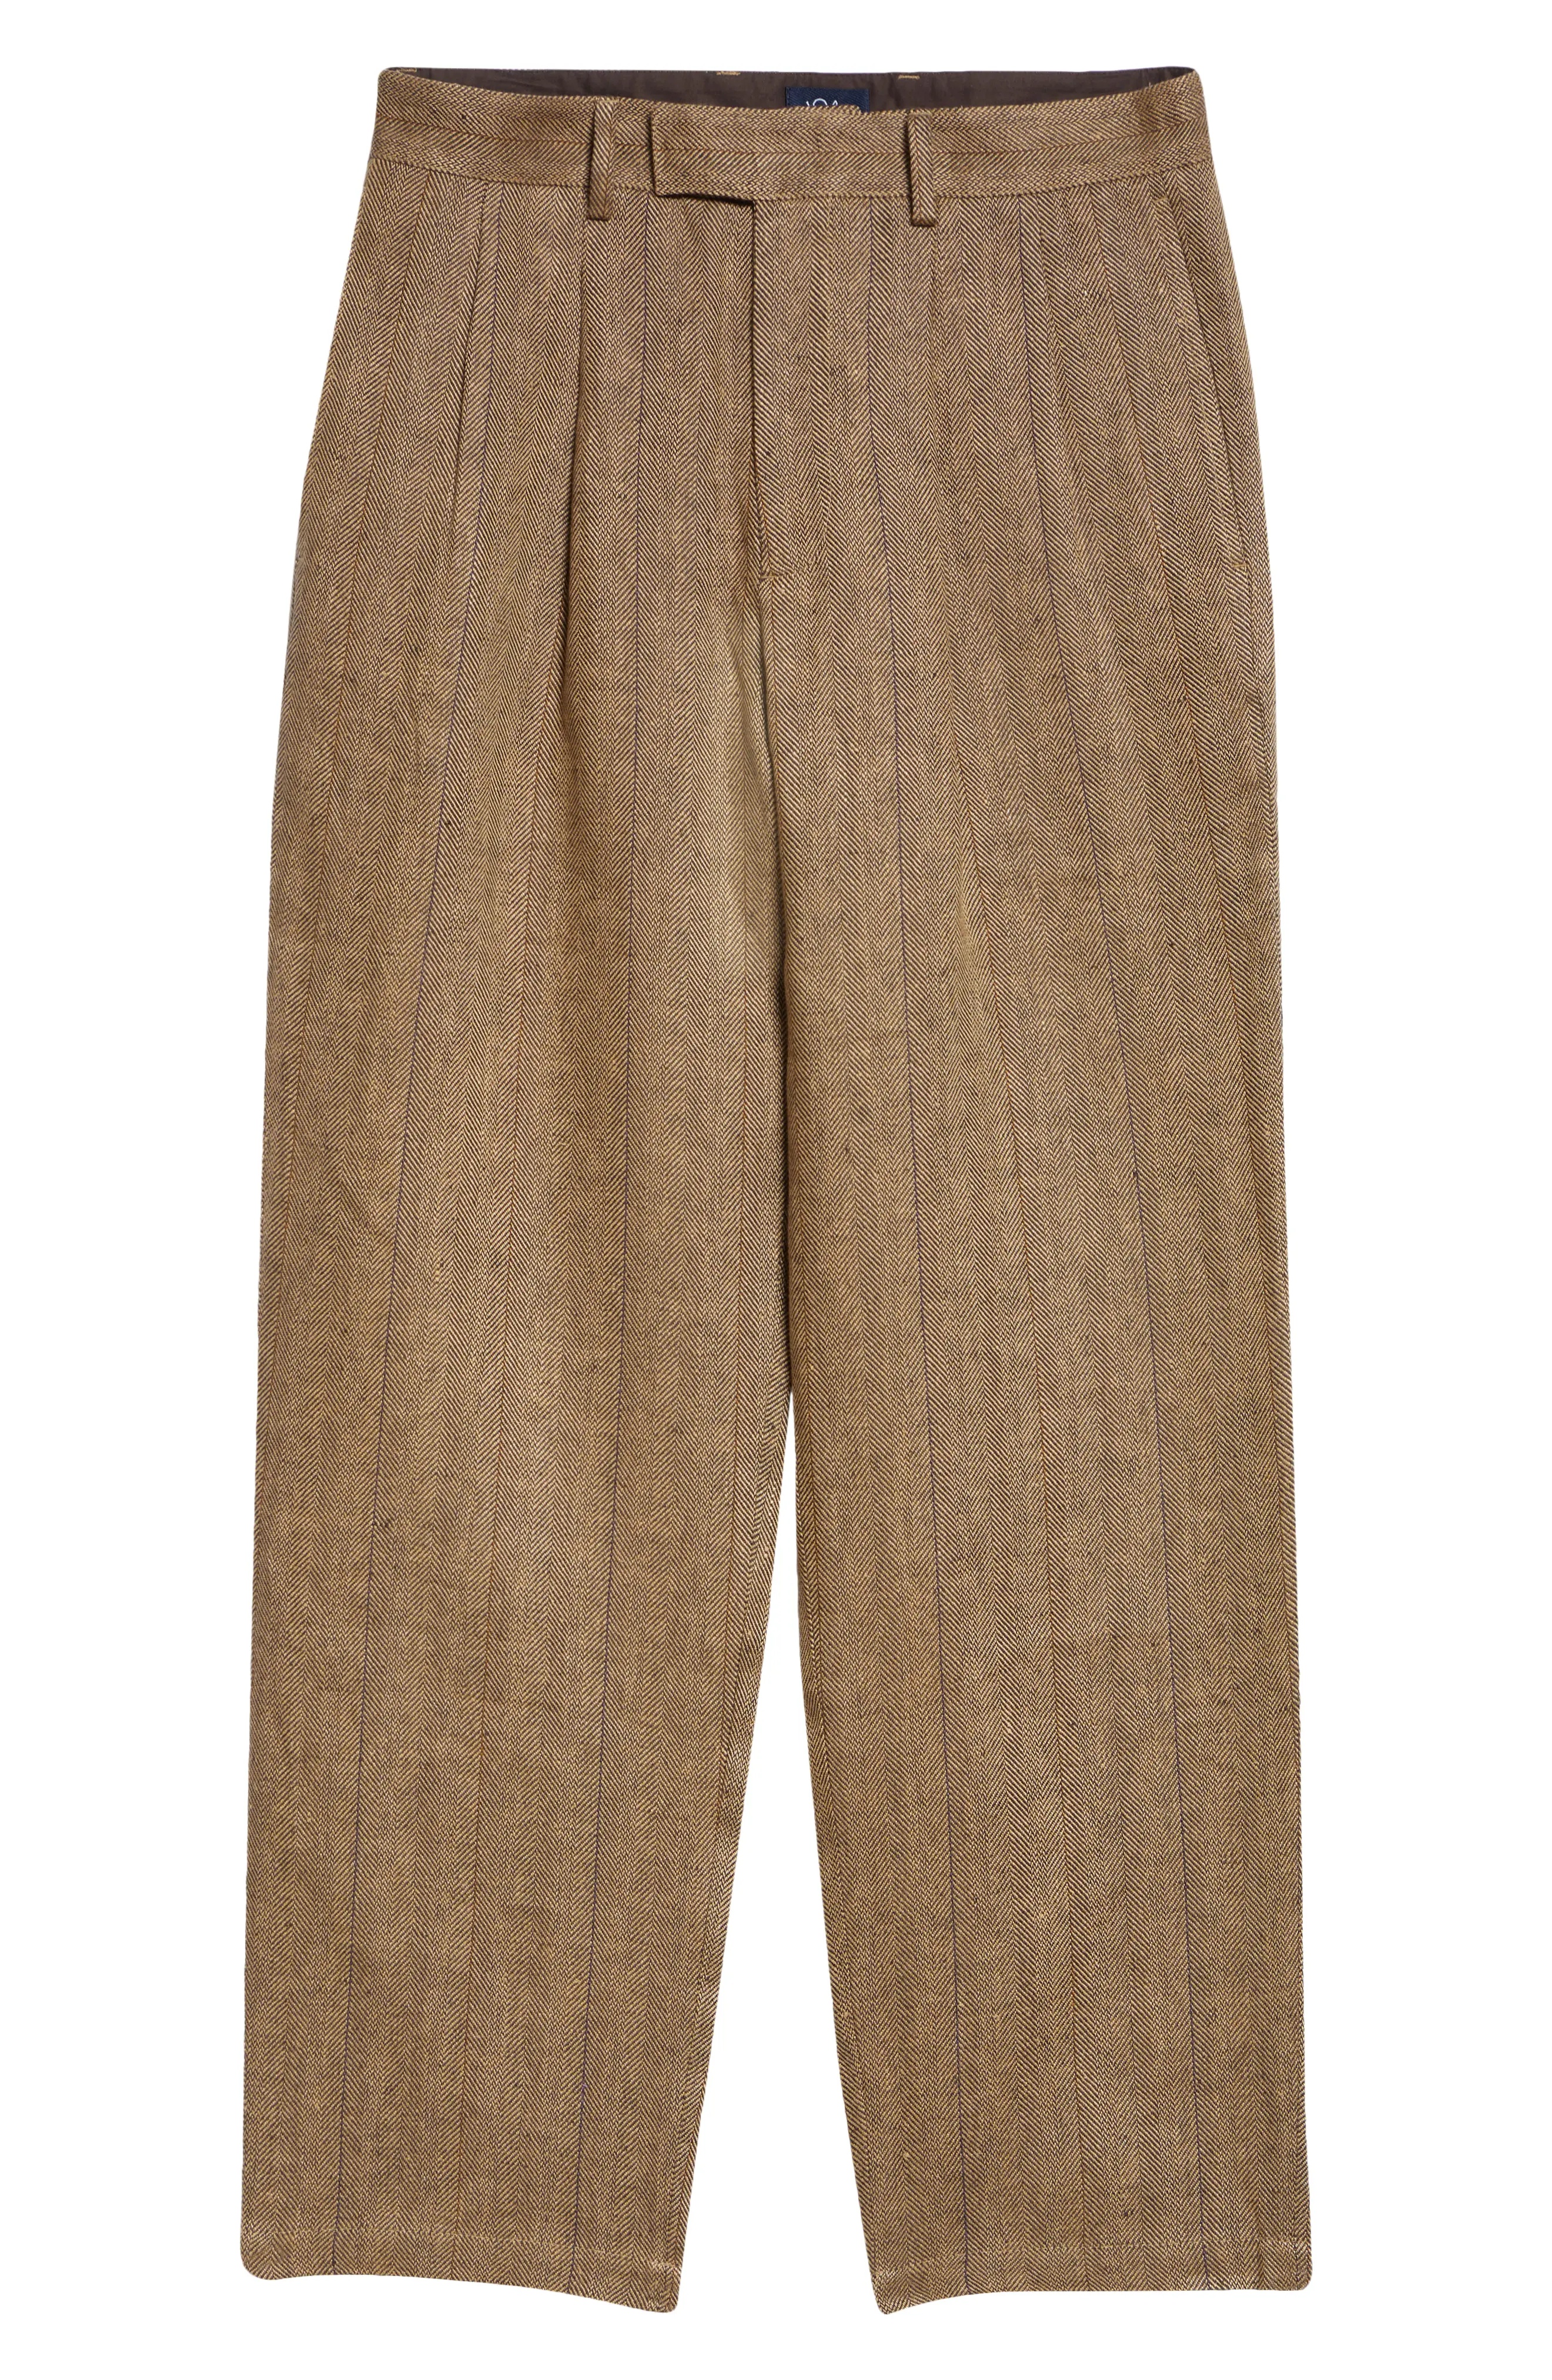 Double Pleat Linen Herringbone Pants in Tan/Brown Herringbone - 6